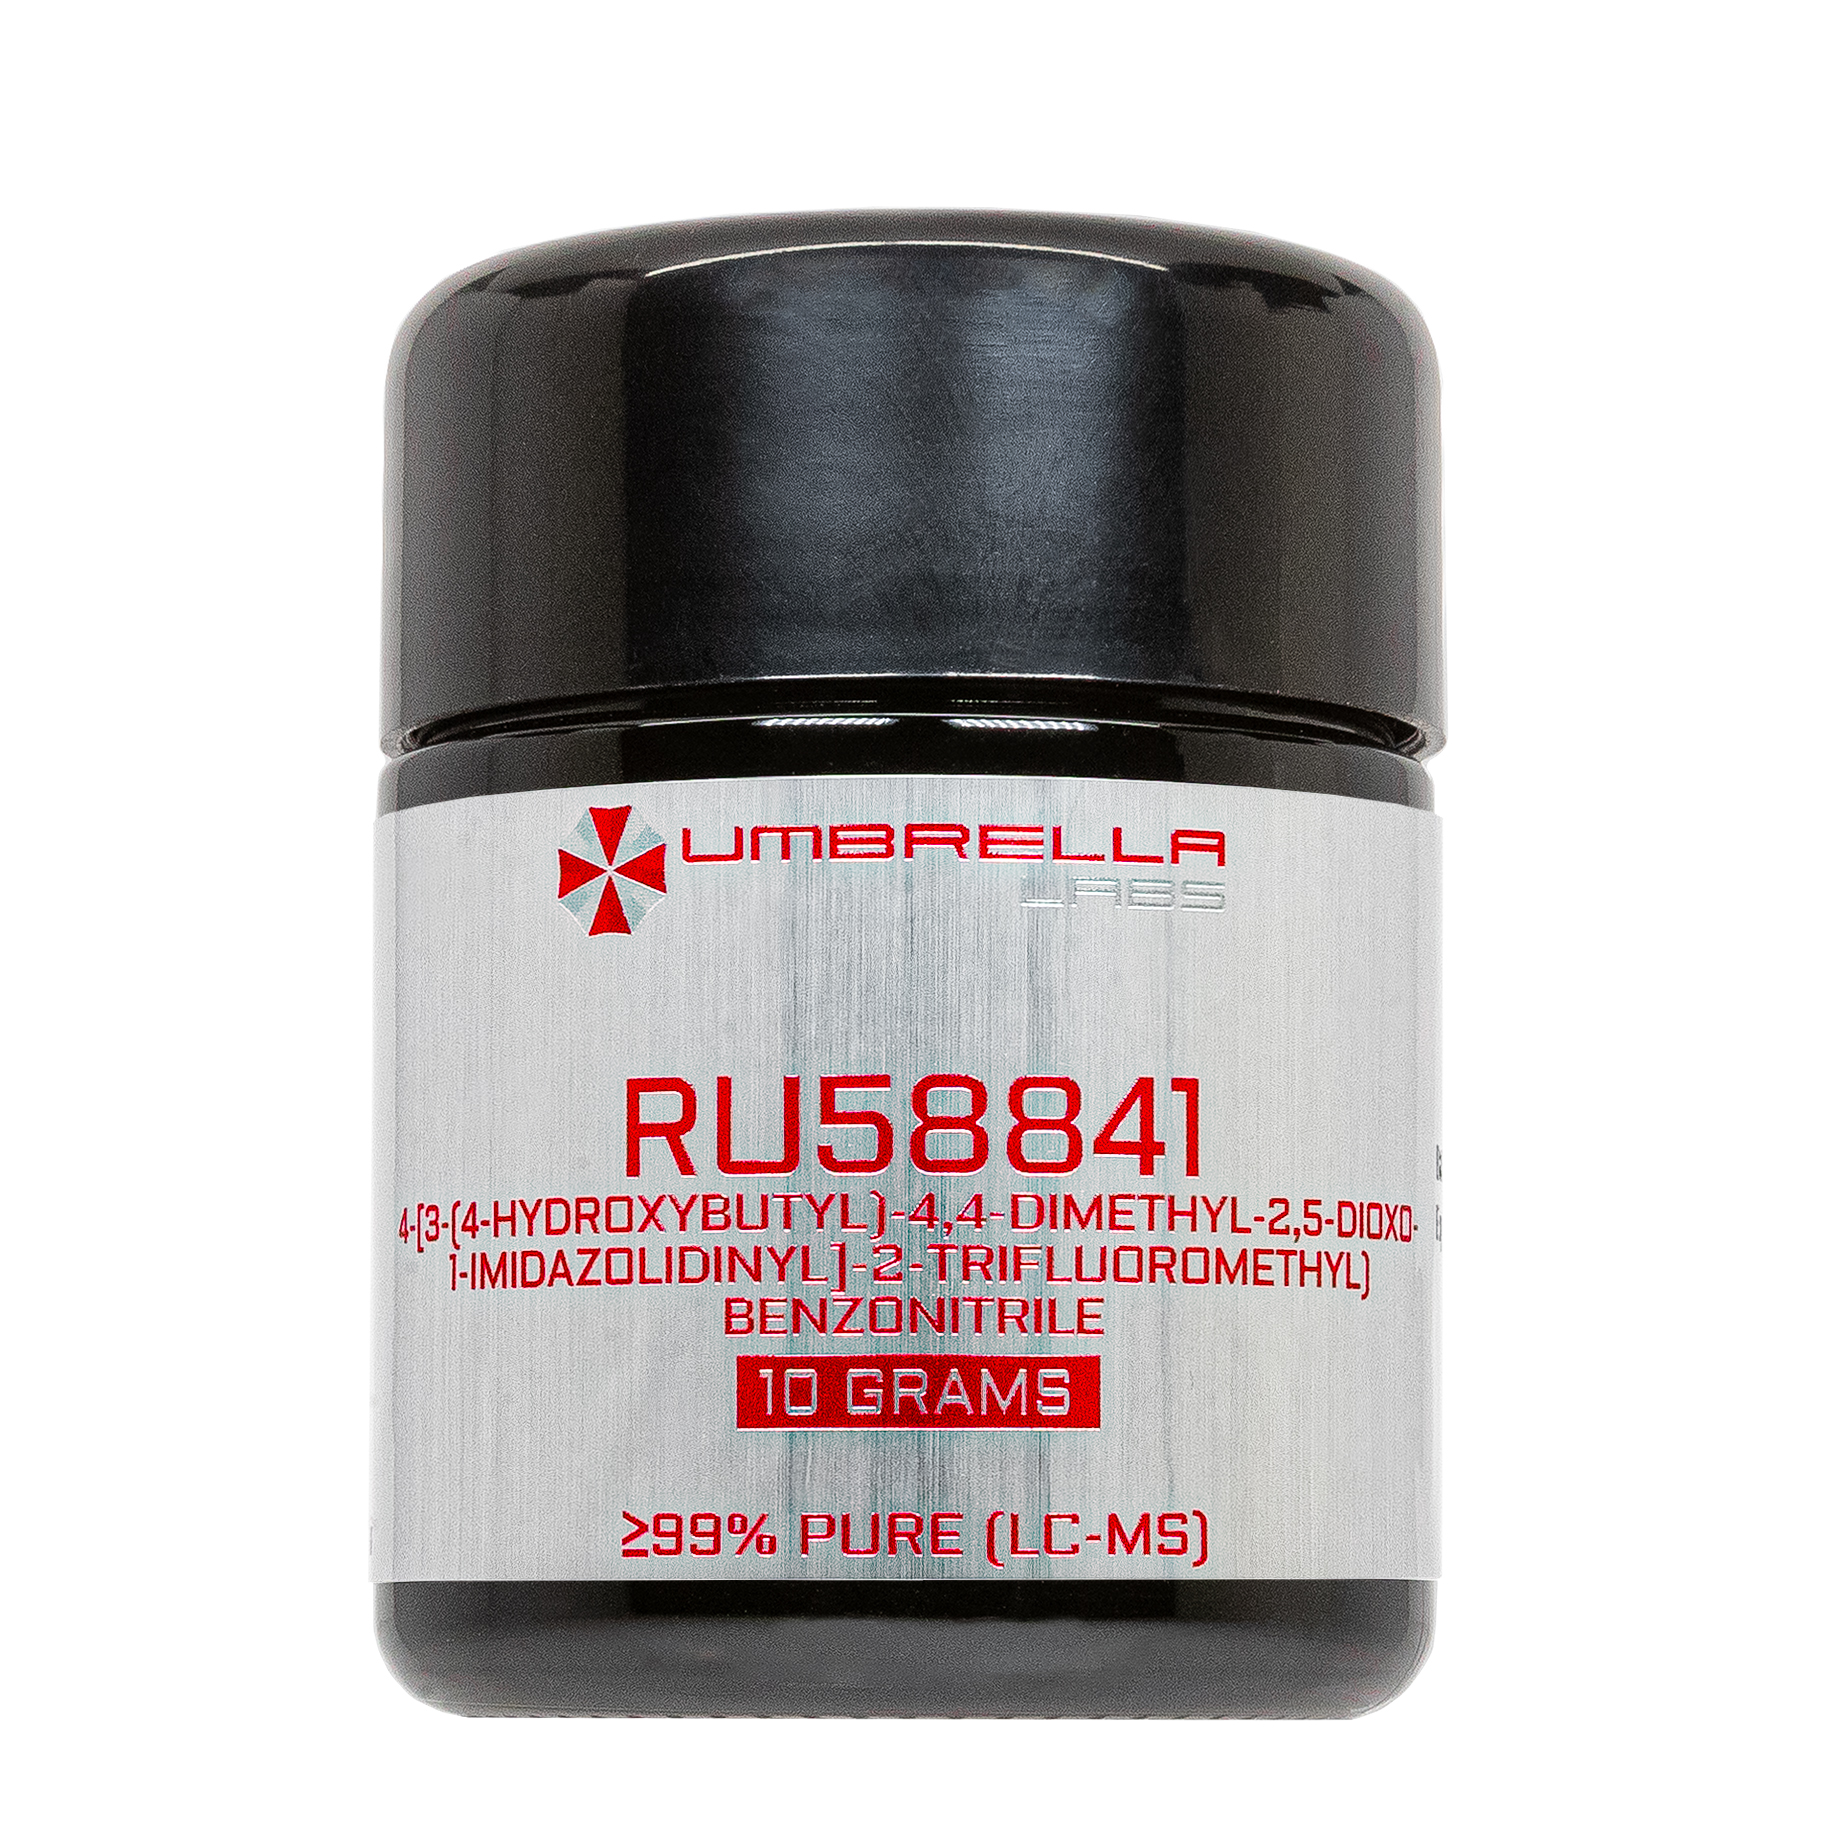 ru58841 powder (sarm support)